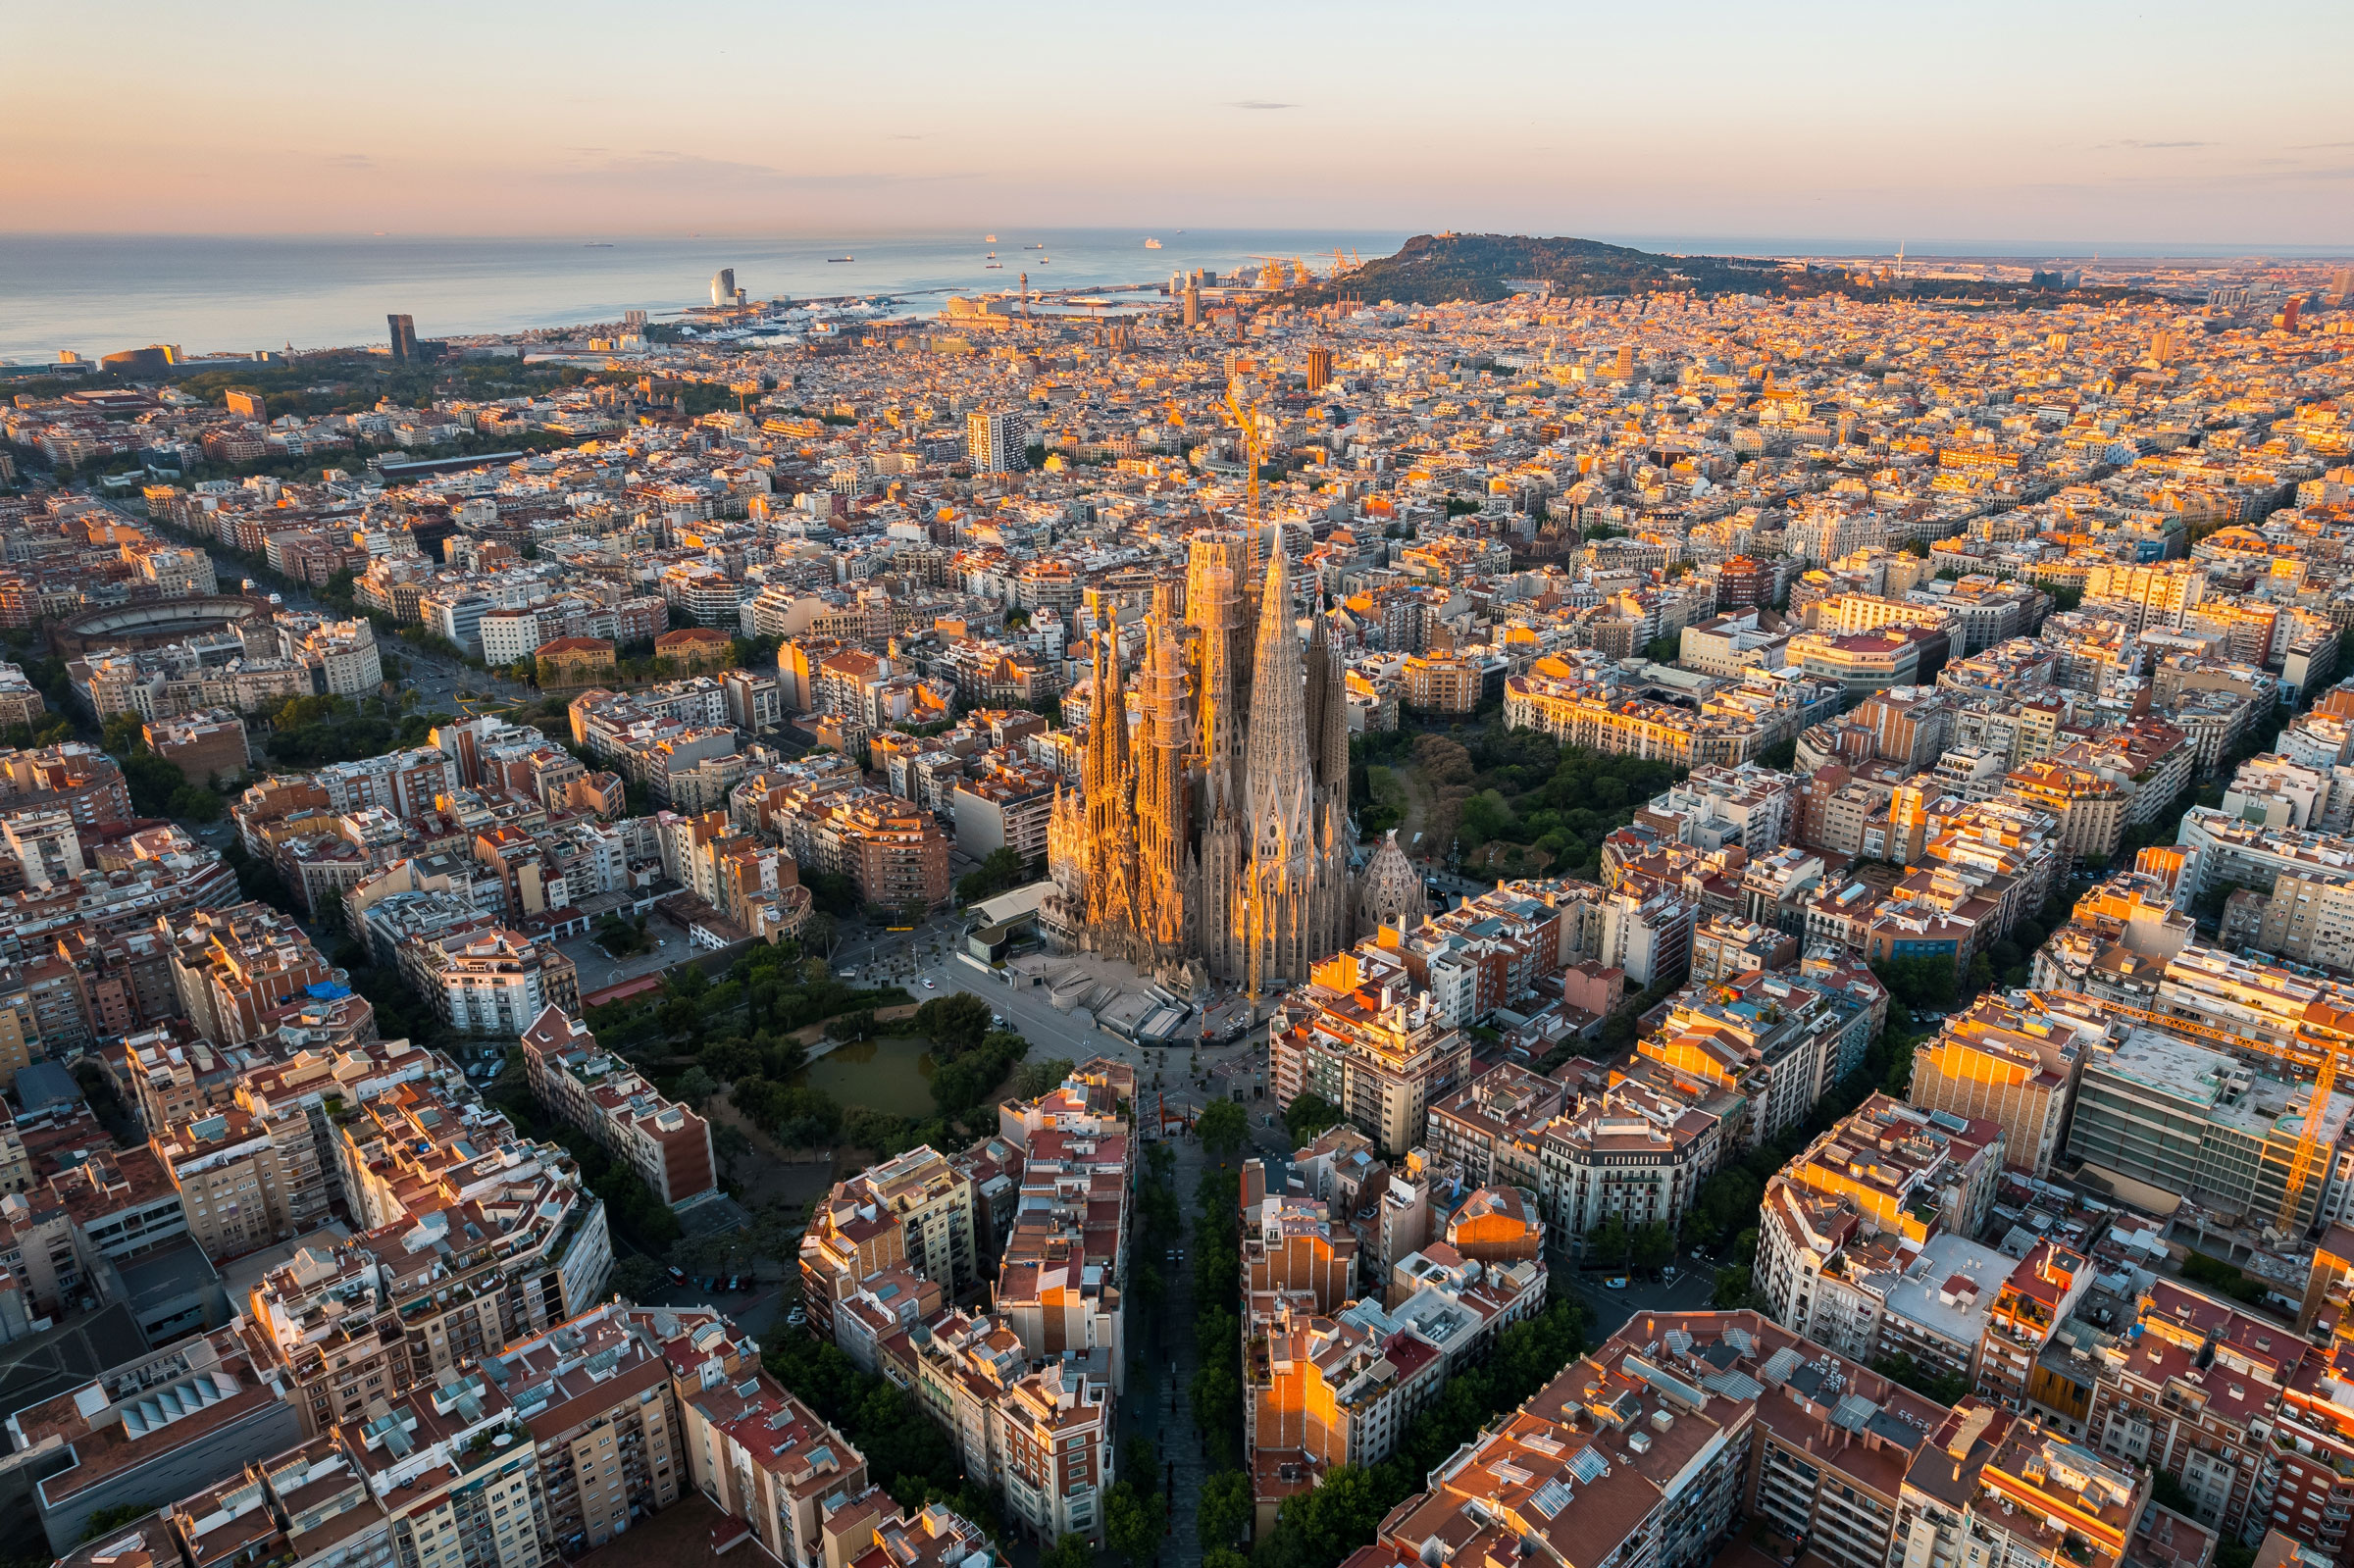 Aerial view Sagrada Familia Basilica, Barcelona, Spain. (Vunav/Shutterstock)